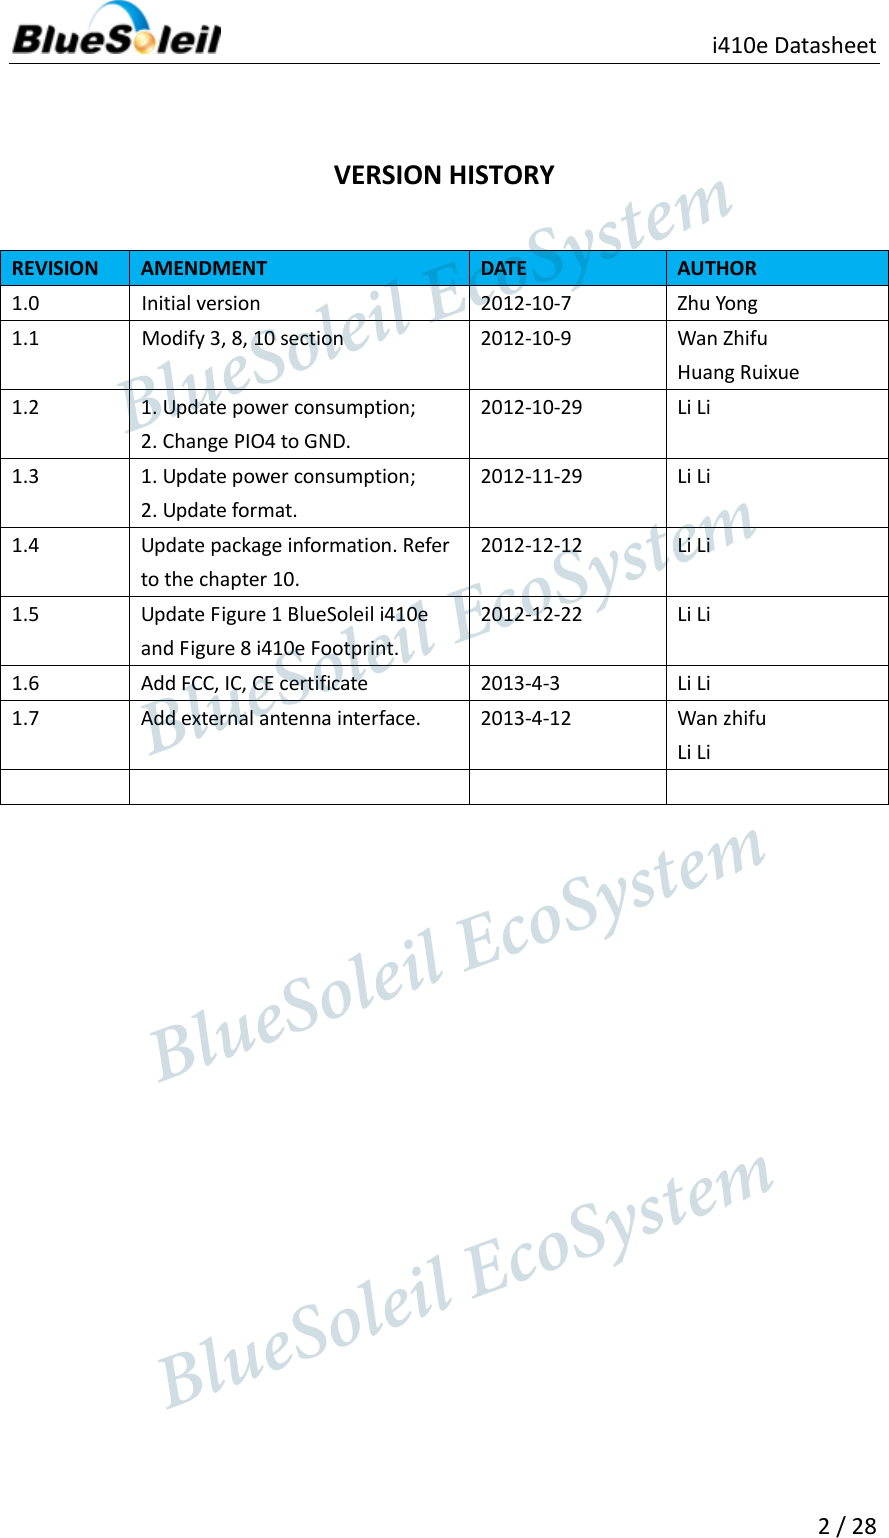                                               i410e Datasheet   2 / 28   VERSION HISTORY REVISION AMENDMENT DATE AUTHOR 1.0   Initial version 2012-10-7 Zhu Yong 1.1   Modify 3, 8, 10 section 2012-10-9 Wan Zhifu           Huang Ruixue 1.2 1. Update power consumption; 2. Change PIO4 to GND. 2012-10-29 Li Li 1.3 1. Update power consumption; 2. Update format. 2012-11-29 Li Li 1.4 Update package information. Refer to the chapter 10. 2012-12-12 Li Li 1.5 Update Figure 1 BlueSoleil i410e and Figure 8 i410e Footprint. 2012-12-22 Li Li 1.6 Add FCC, IC, CE certificate 2013-4-3 Li Li 1.7 Add external antenna interface. 2013-4-12 Wan zhifu Li Li                         BlueSoleil EcoSystem            BlueSoleil EcoSystem      BlueSoleil EcoSystemBlueSoleil EcoSystem